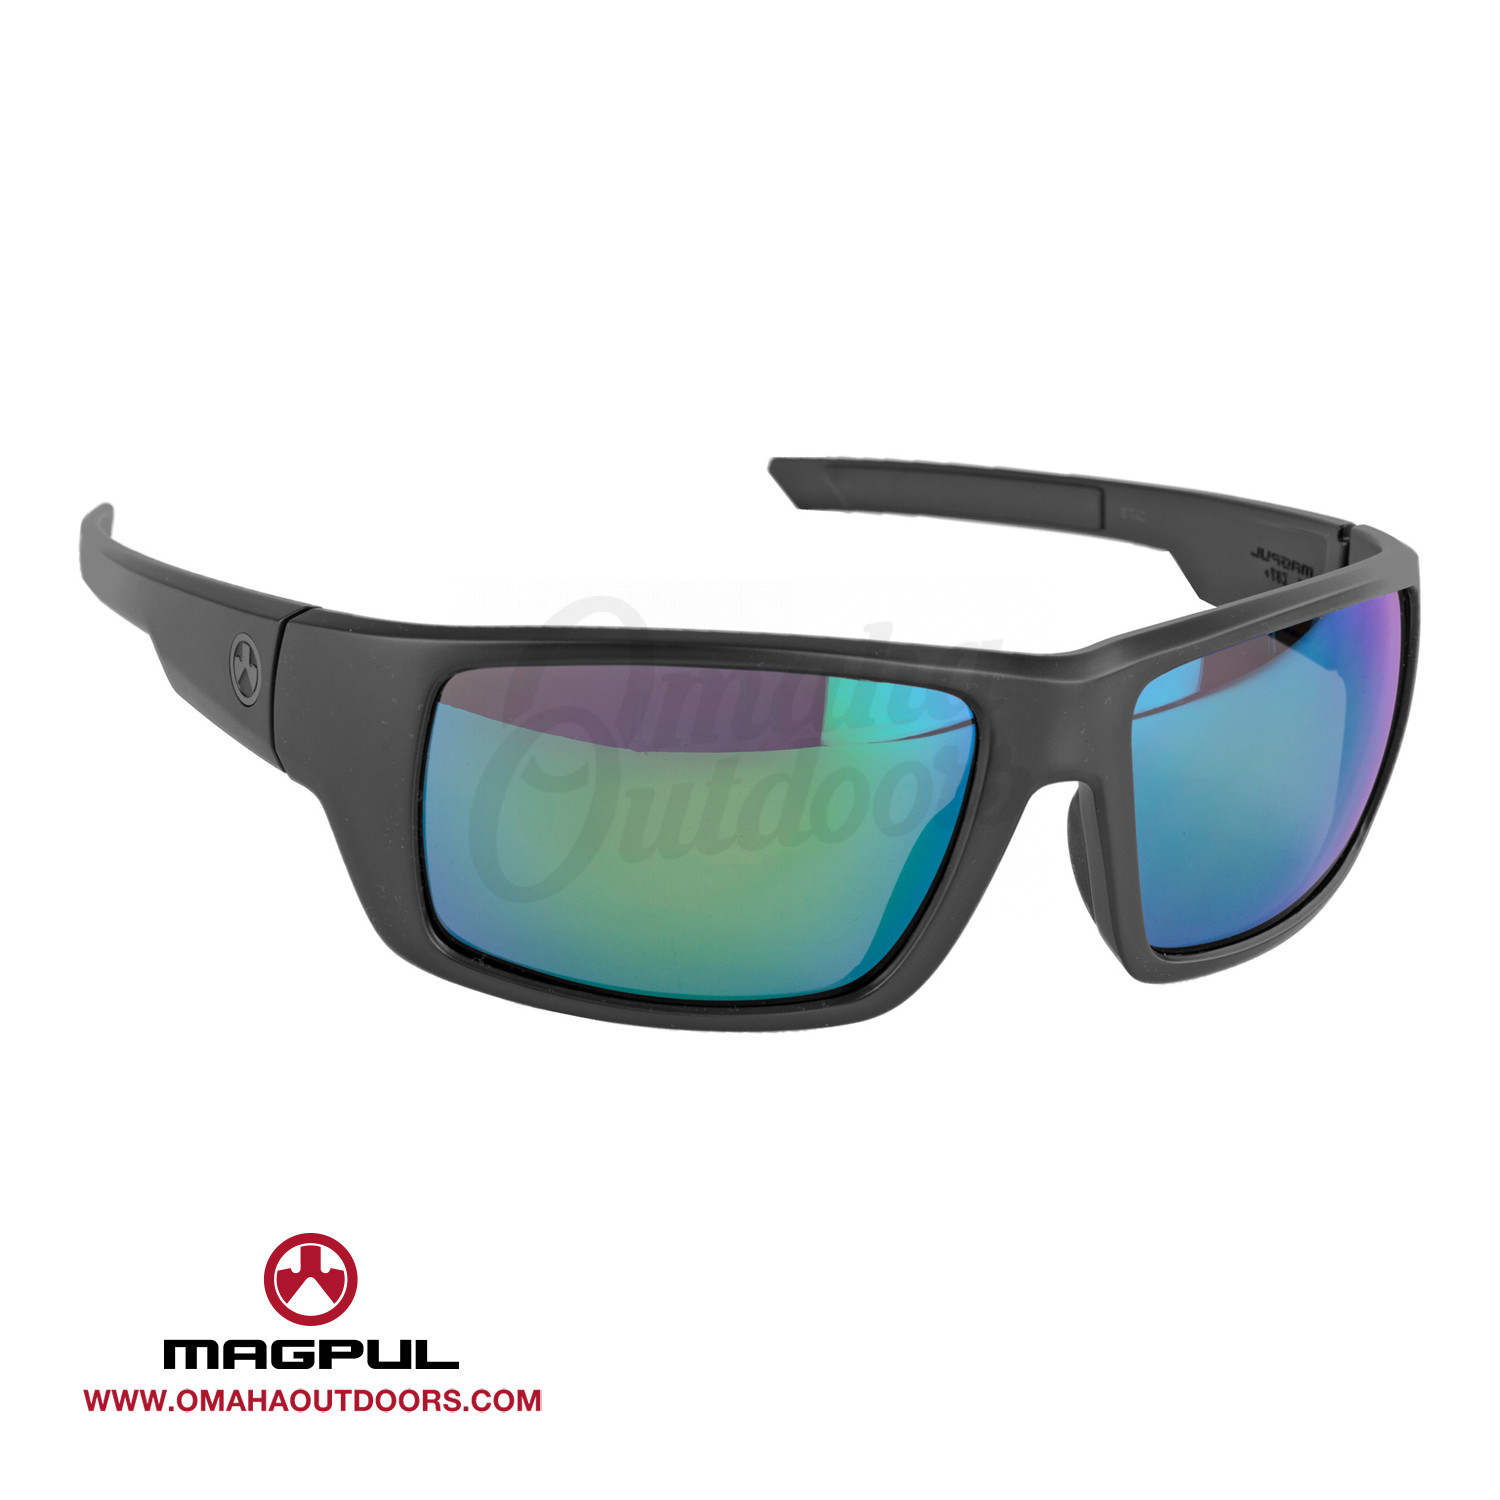 Magpul Apex Sunglasses Violet w/ Green Mirror - Omaha Outdoors